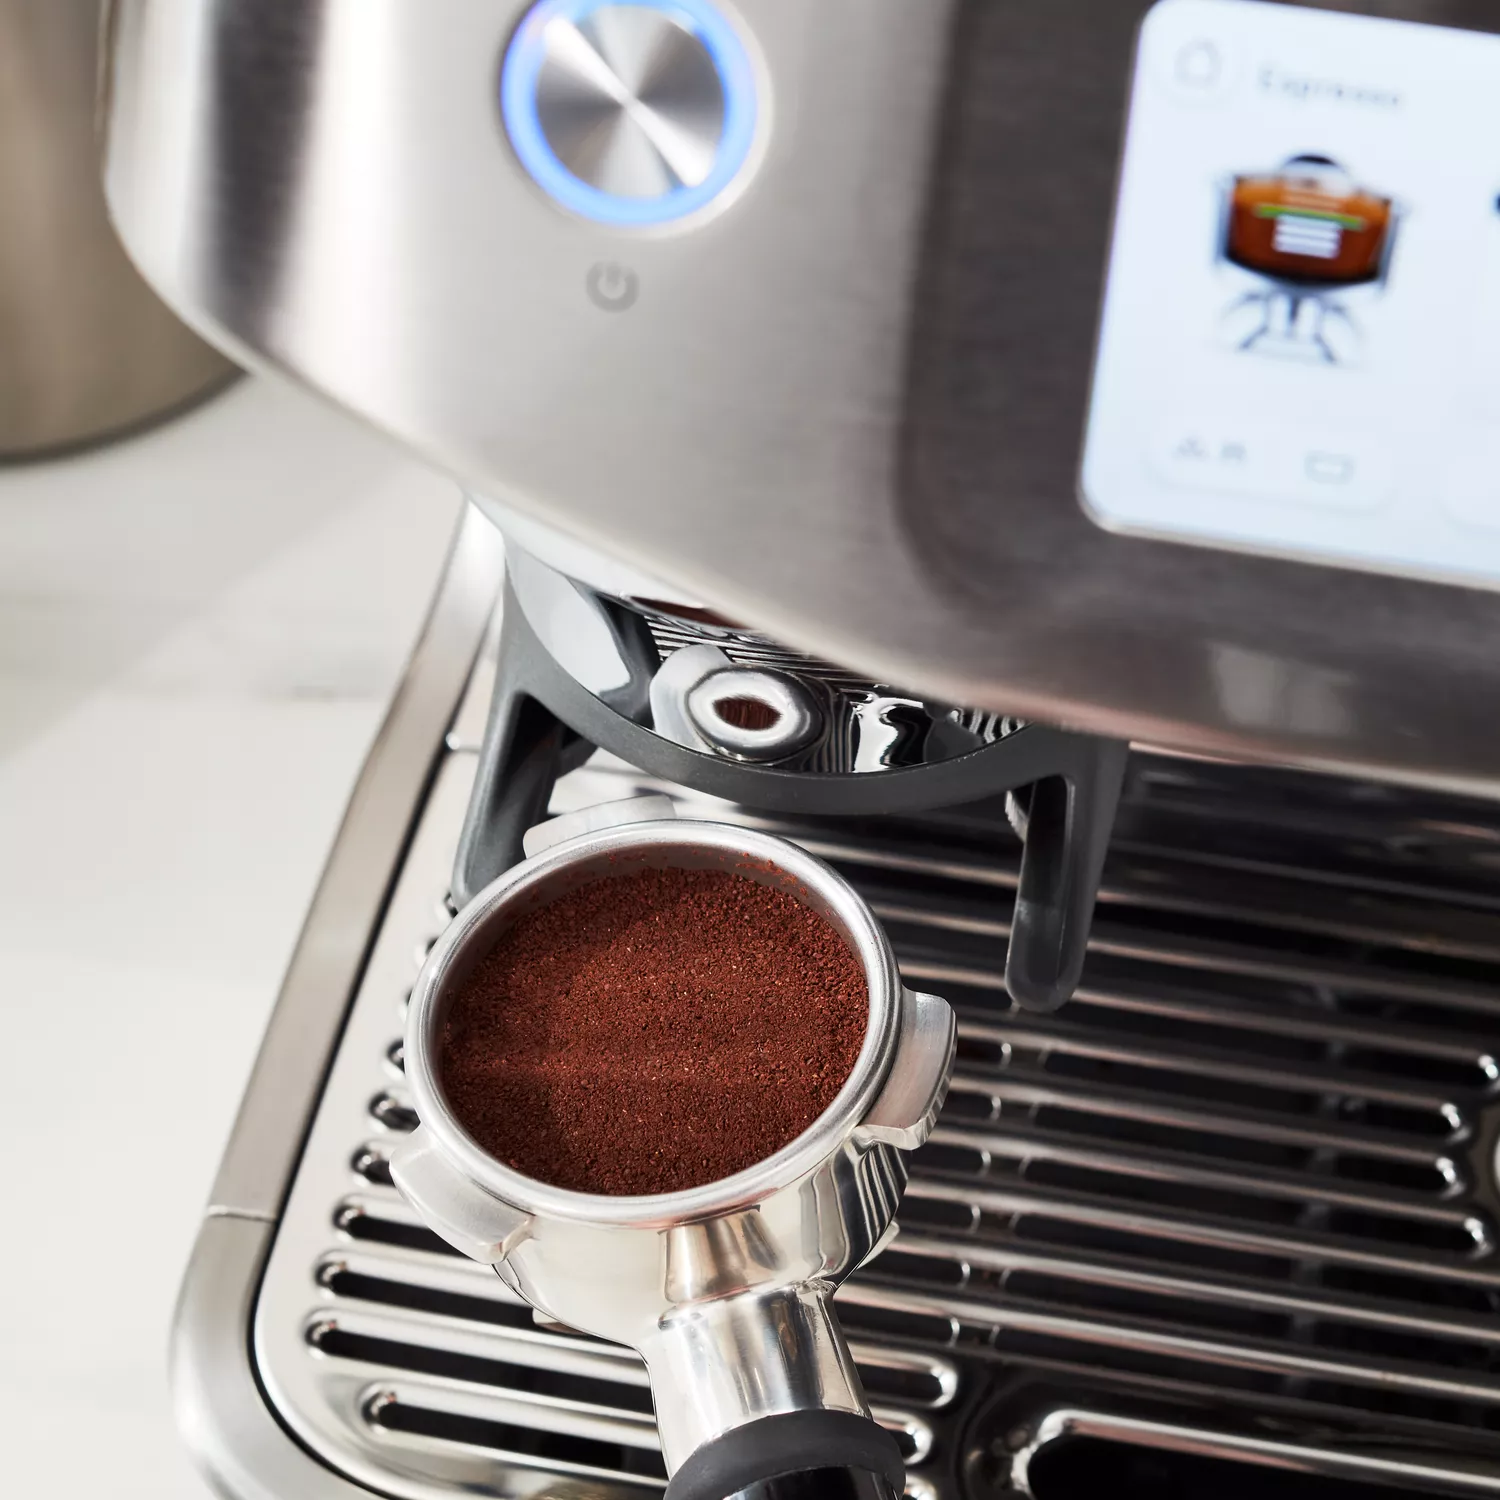 Calphalon Espresso Machine with Coffee Grinder 